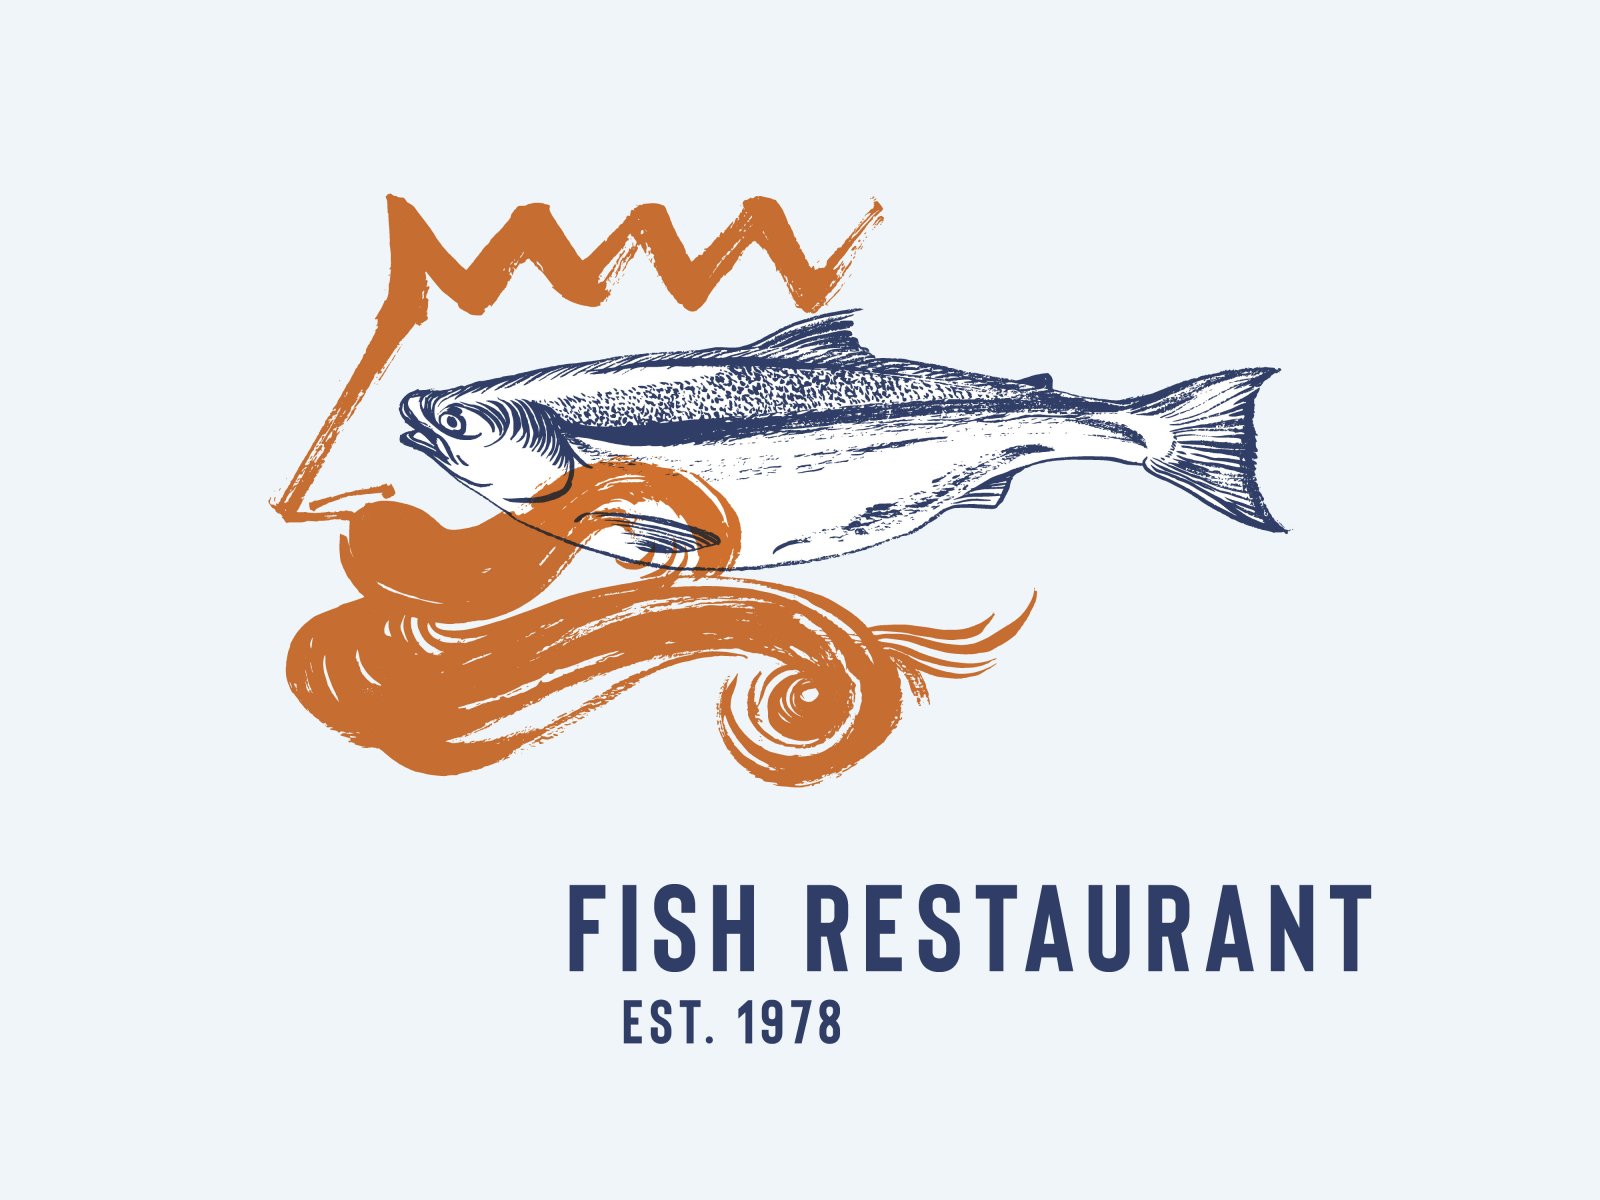 Seafood restaurant logo template by Vera Holera on Dribbble